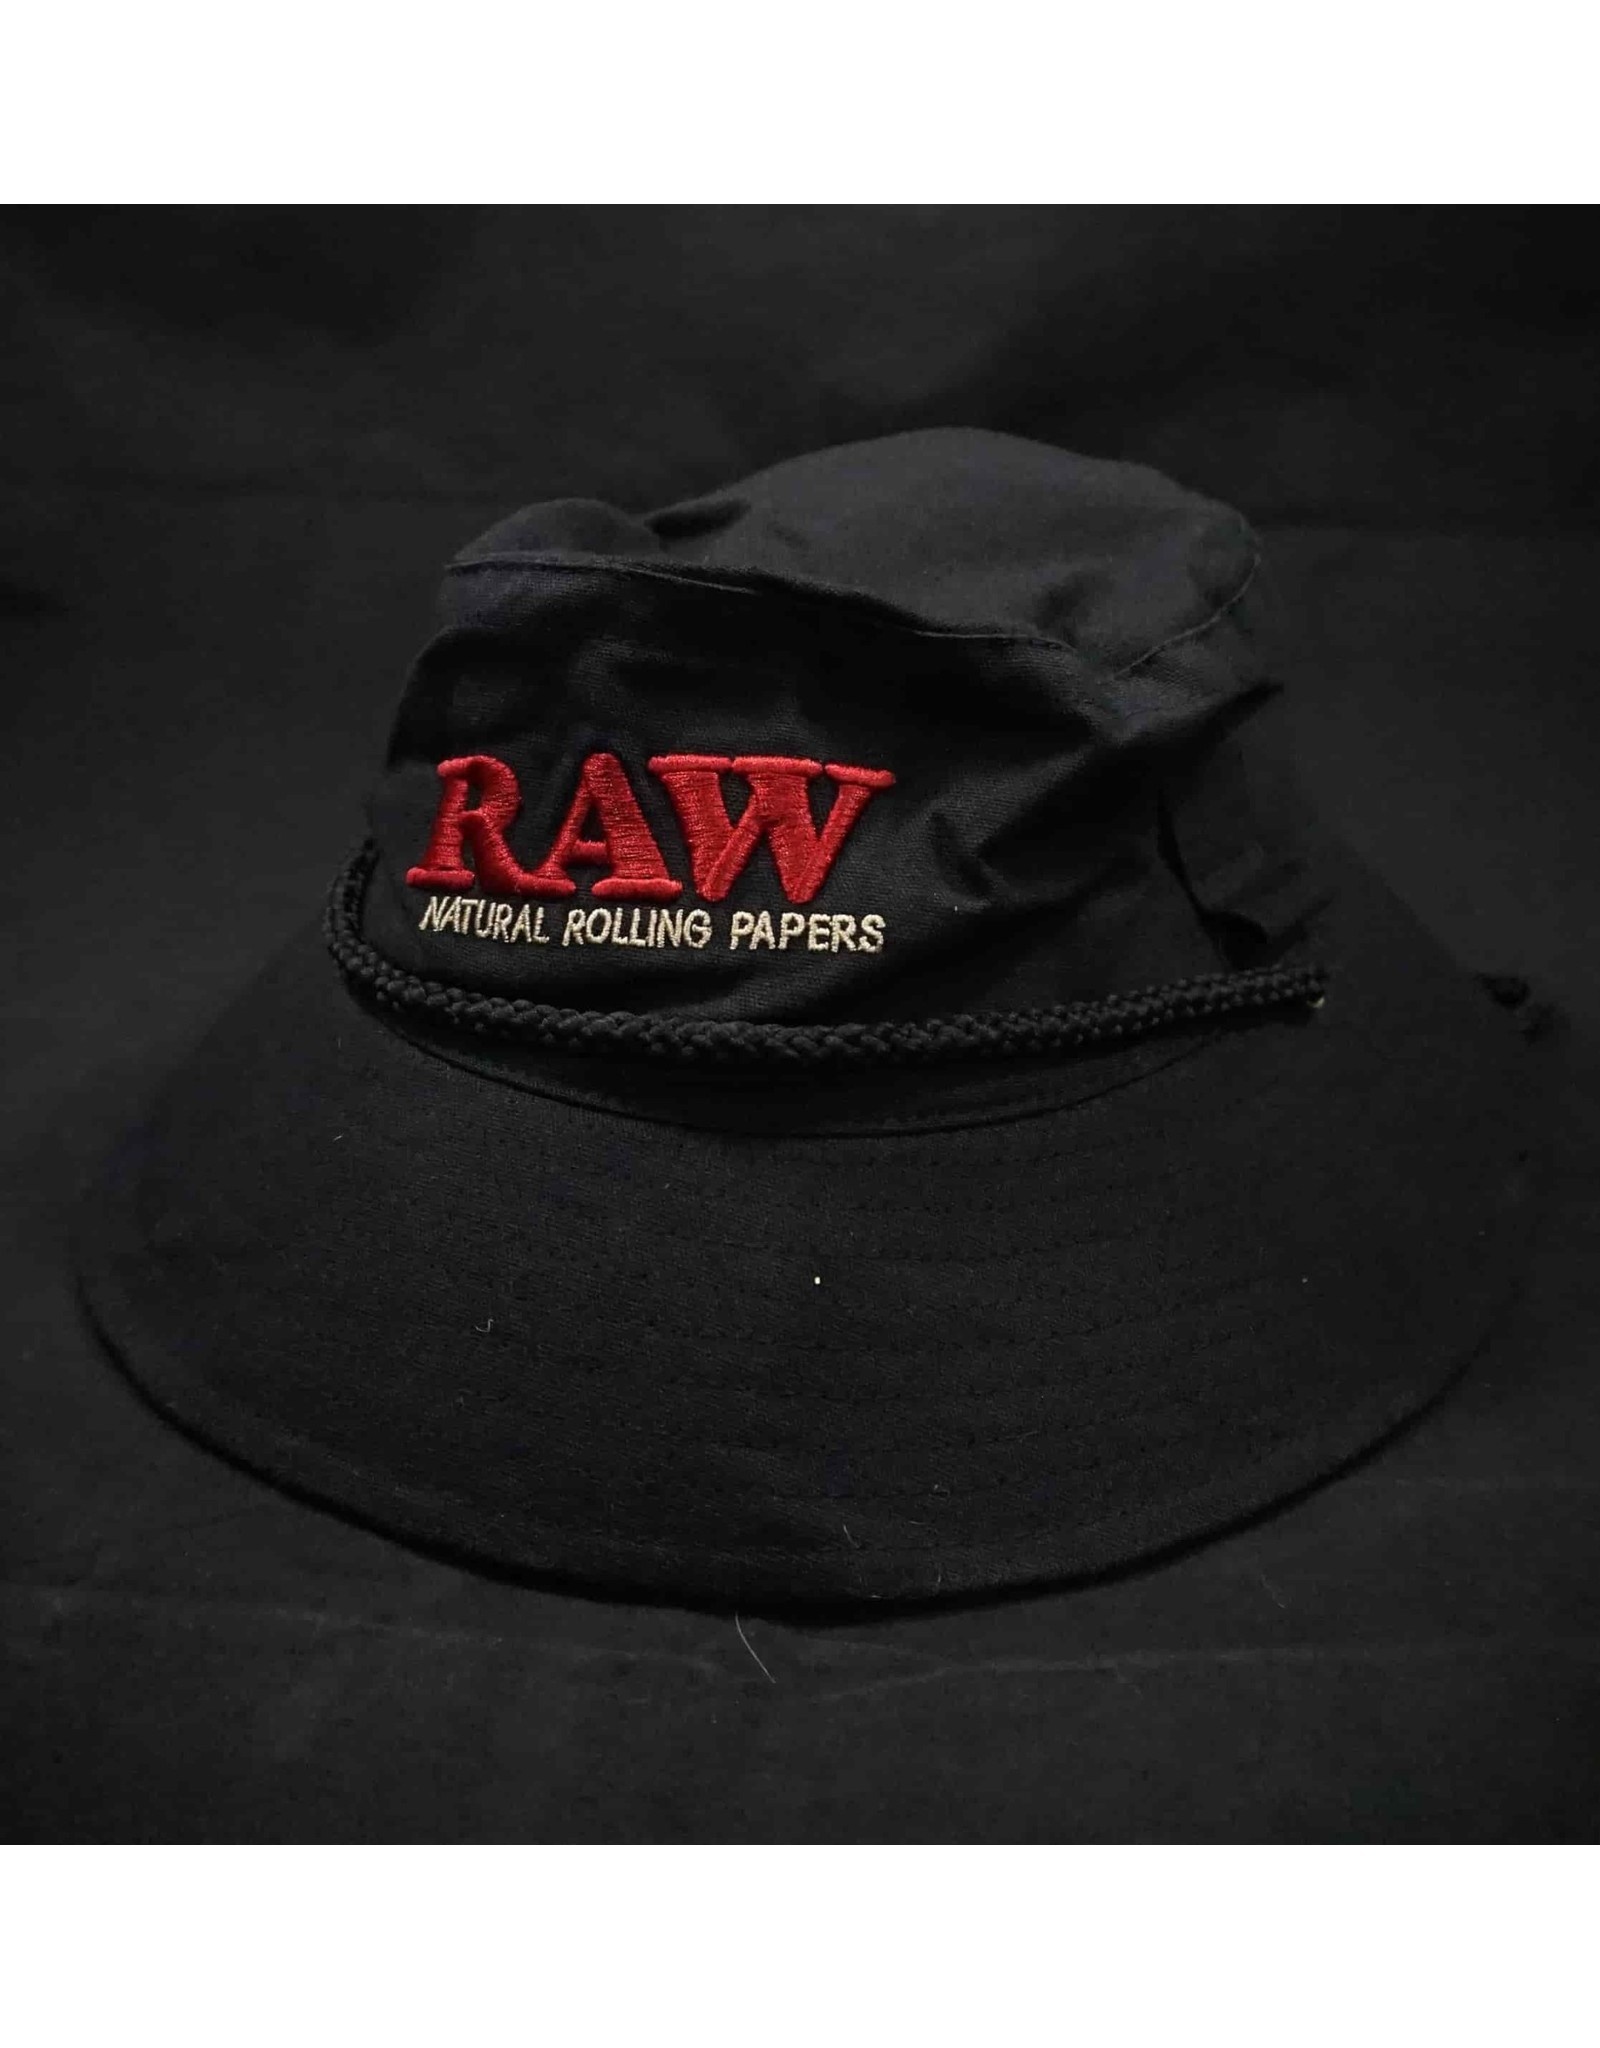 Raw Raw Smokermans Hat Black - KS